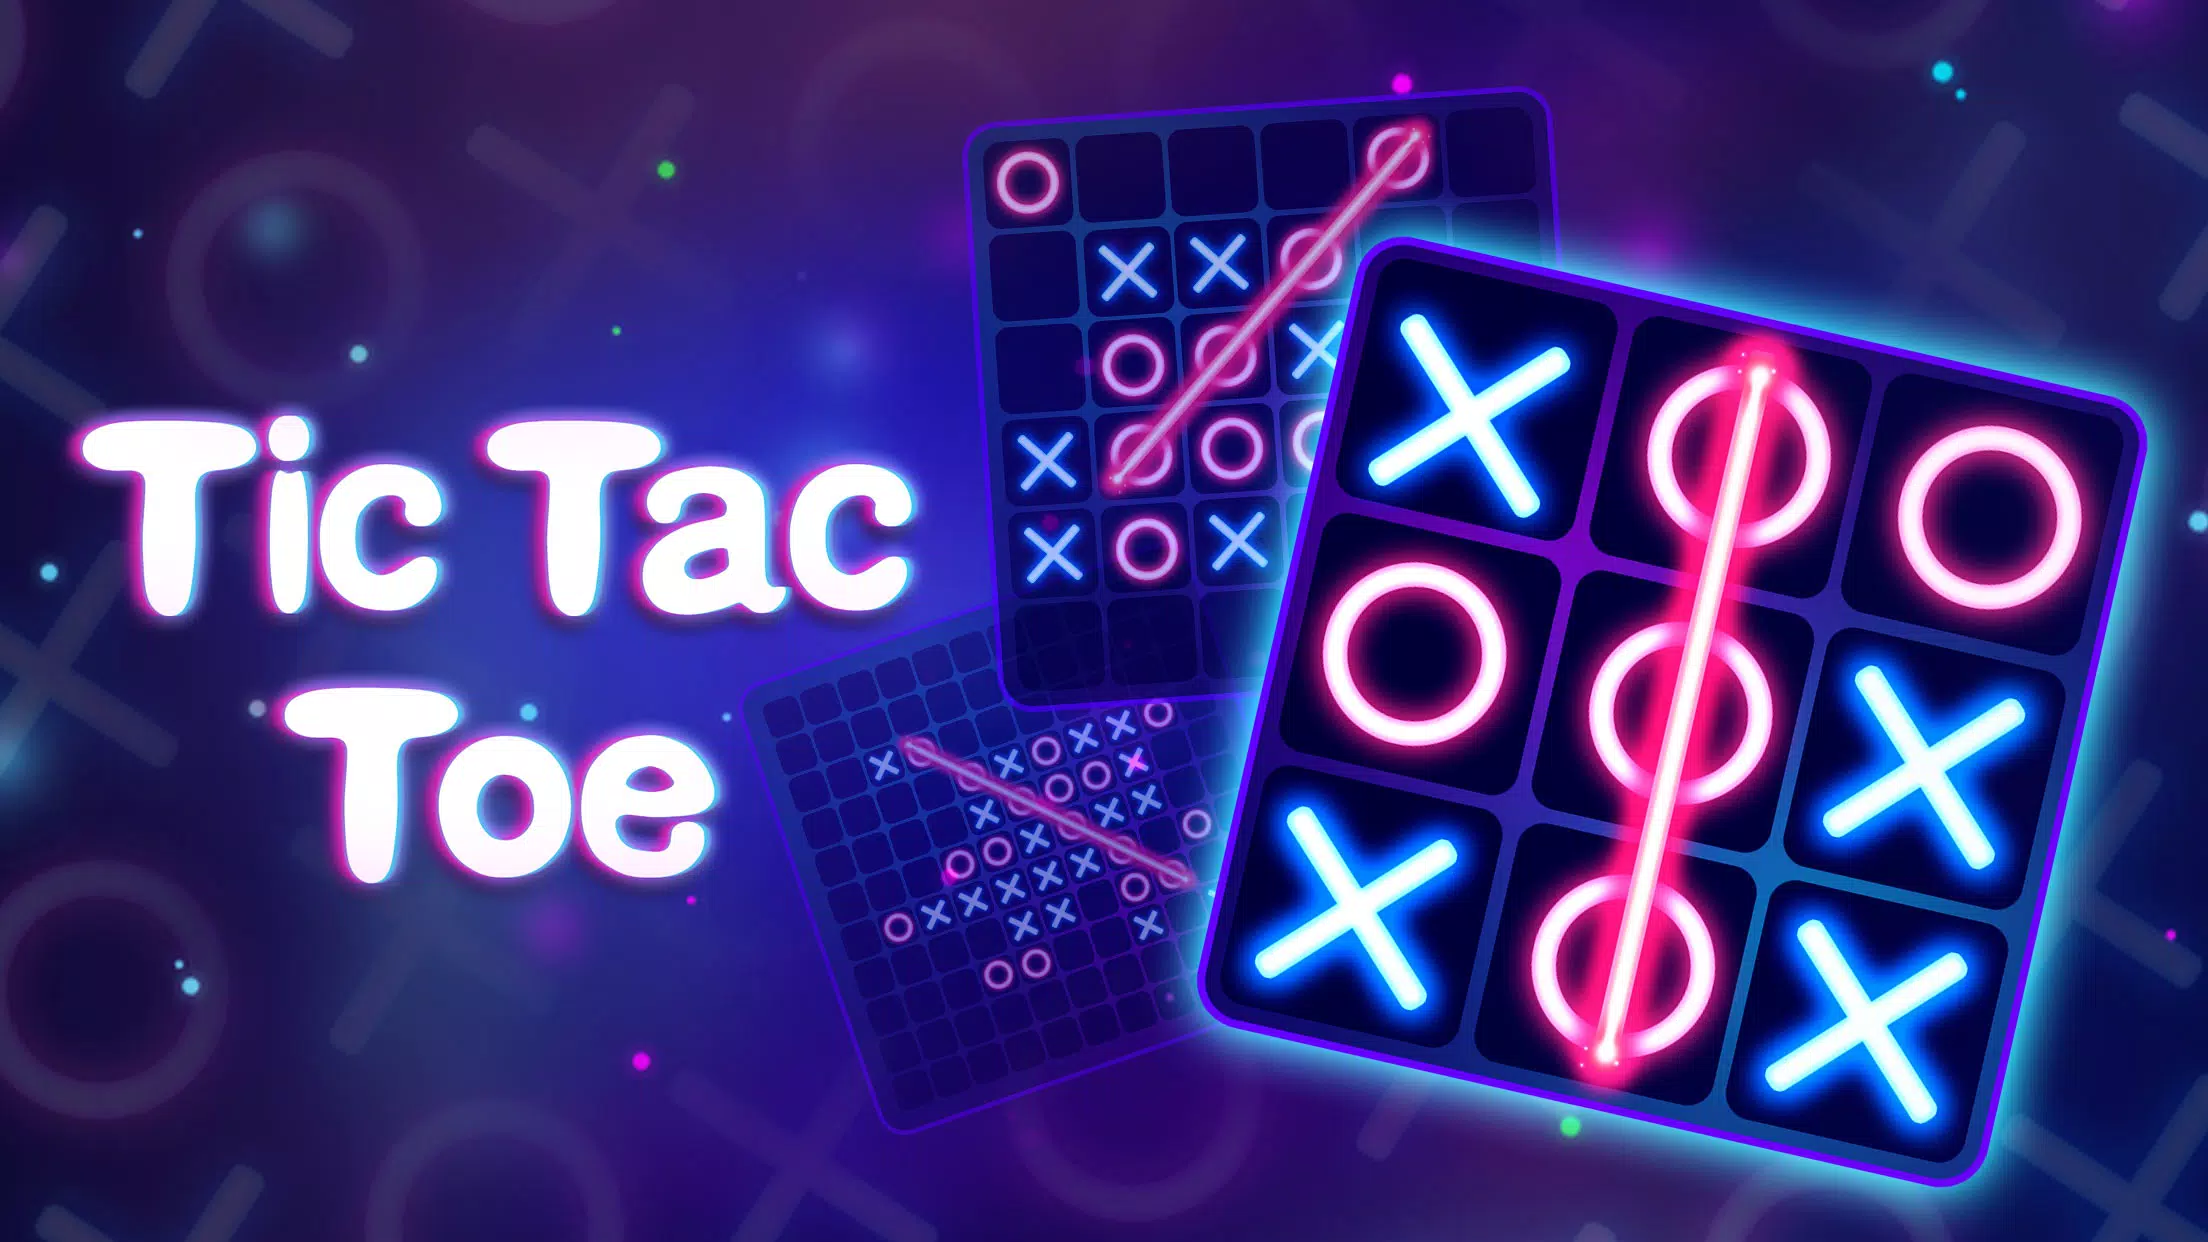 Tic Tac Toe 2 Player:Glow XOXO - Games